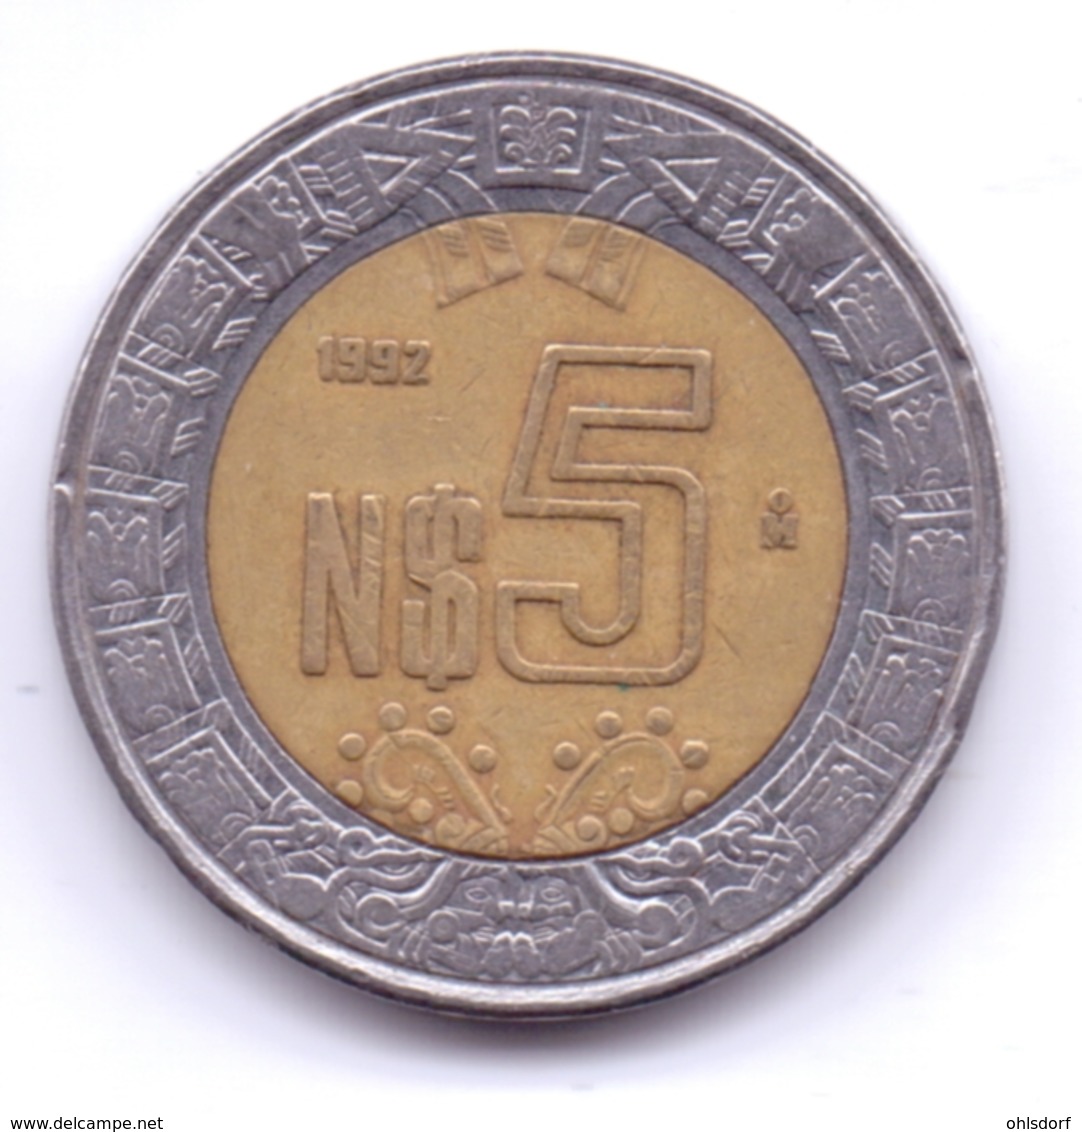 MEXICO 1992: 5 Nuevos Pesos, KM 552 - Mexico